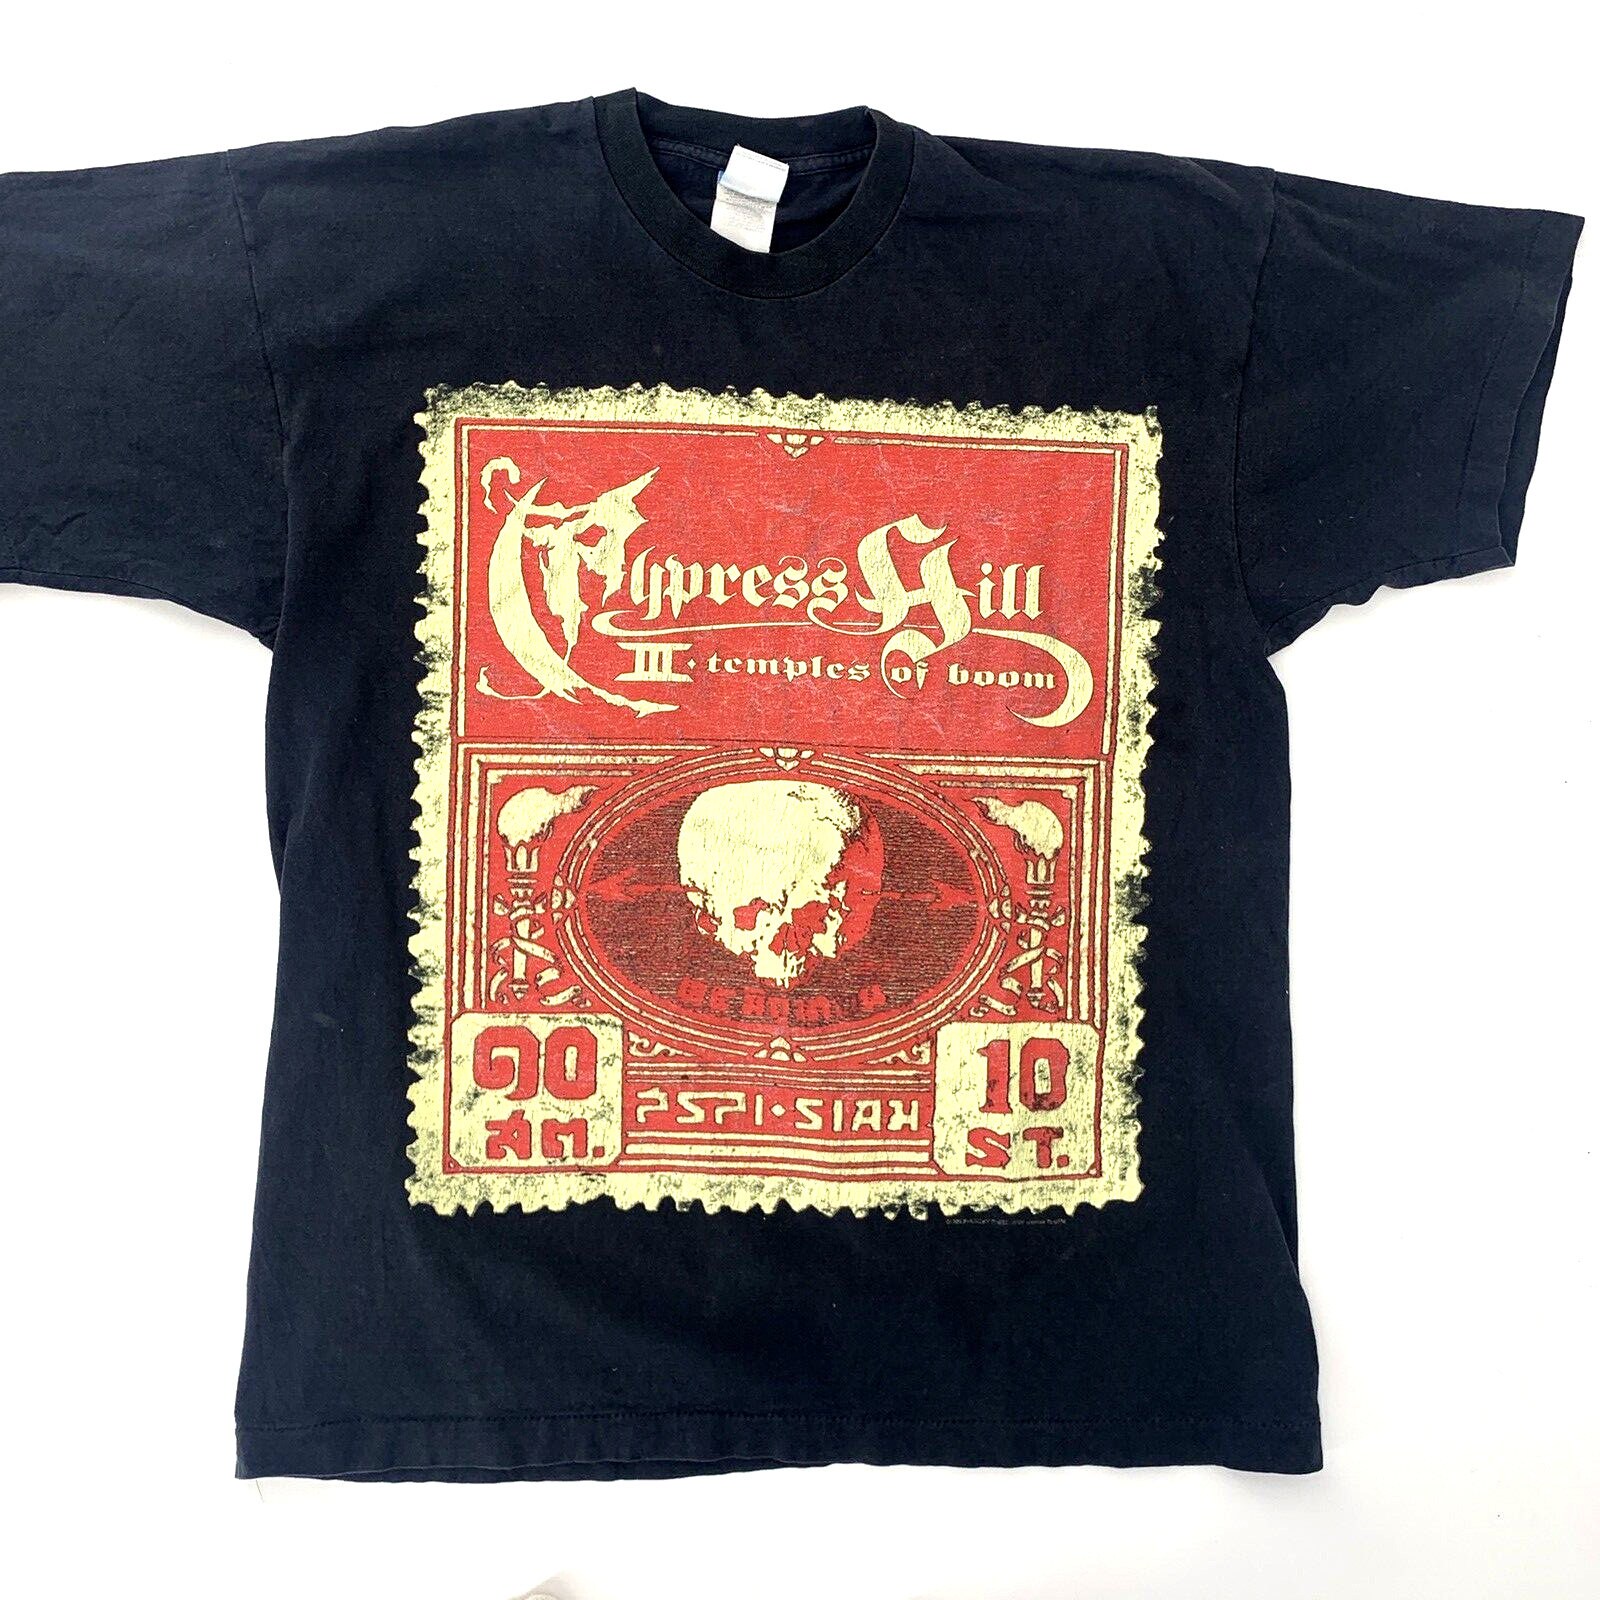 90s Cypress Hill Hip Hop Rap Jersey t-shirt Extra Large - The Captains  Vintage